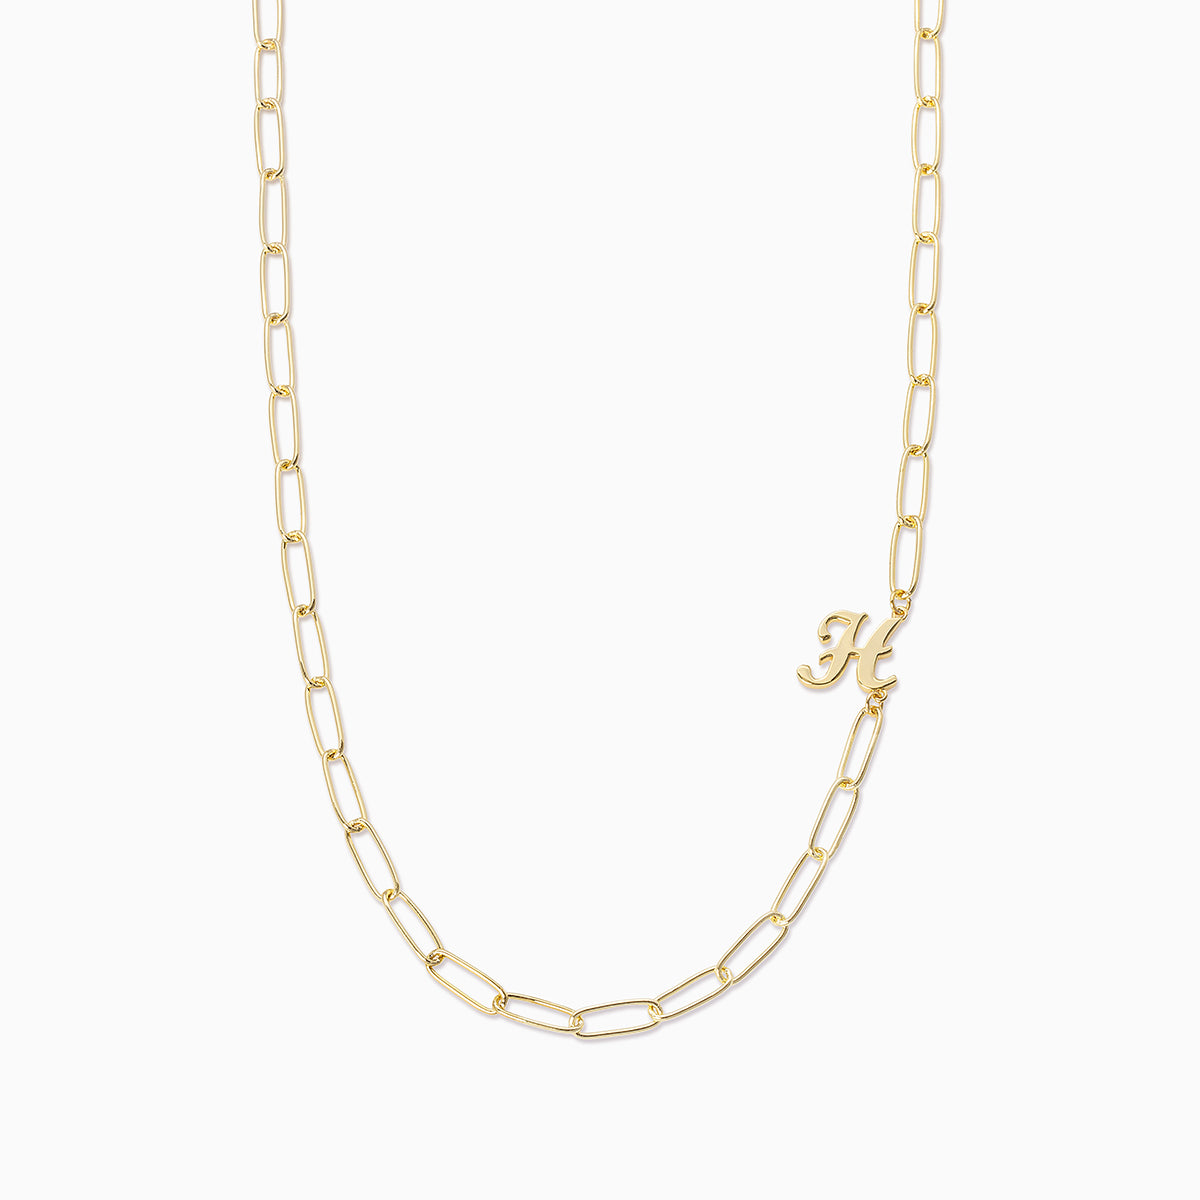 Cursive Initial Necklace | Gold H | Product Image | Uncommon James